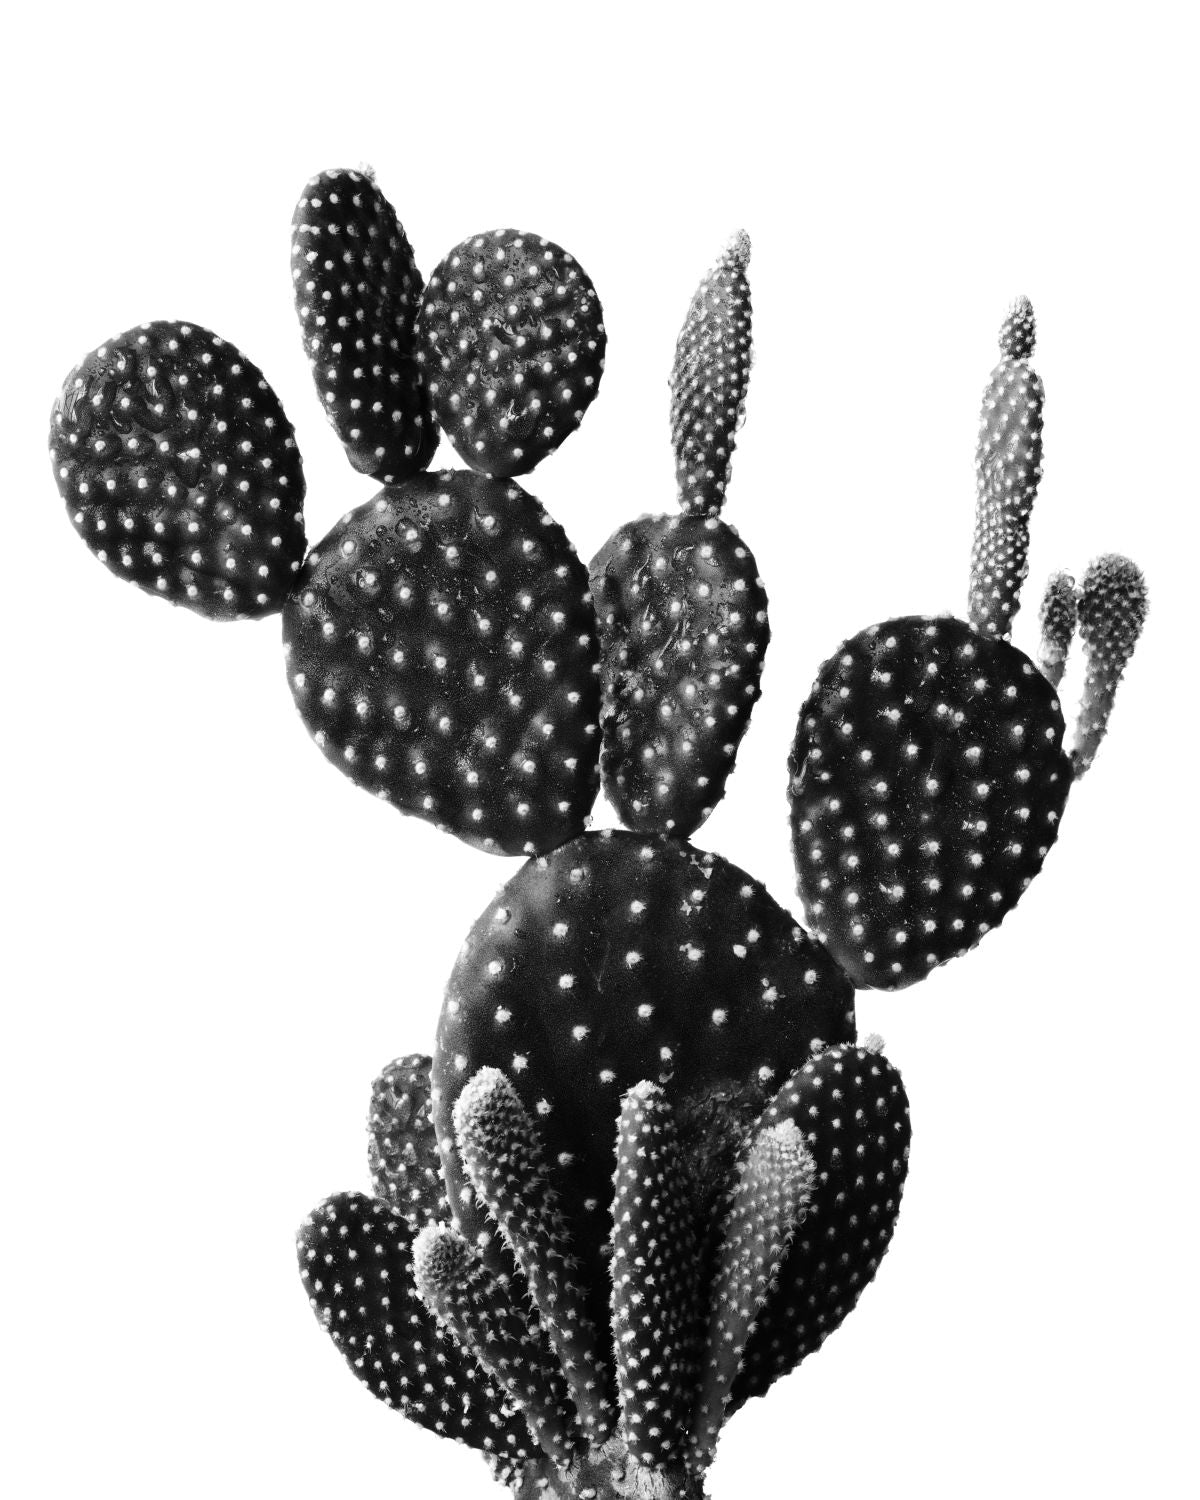 Prickly Spine Cactus